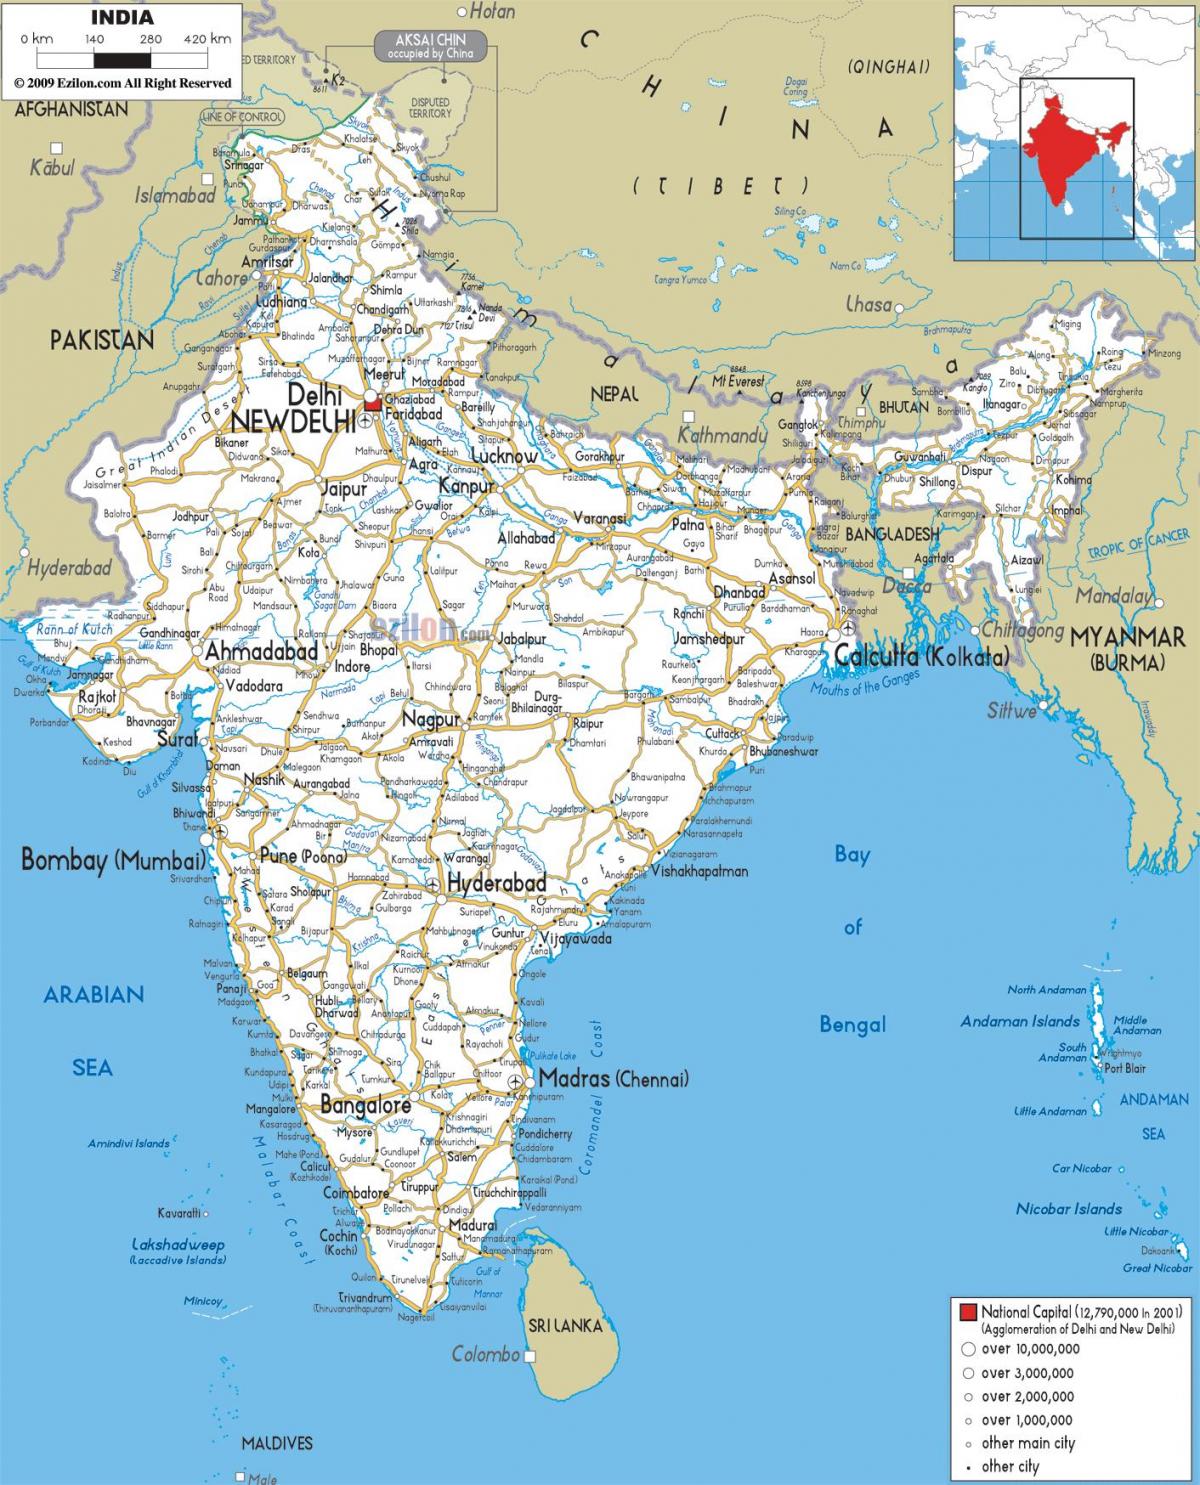 India road map